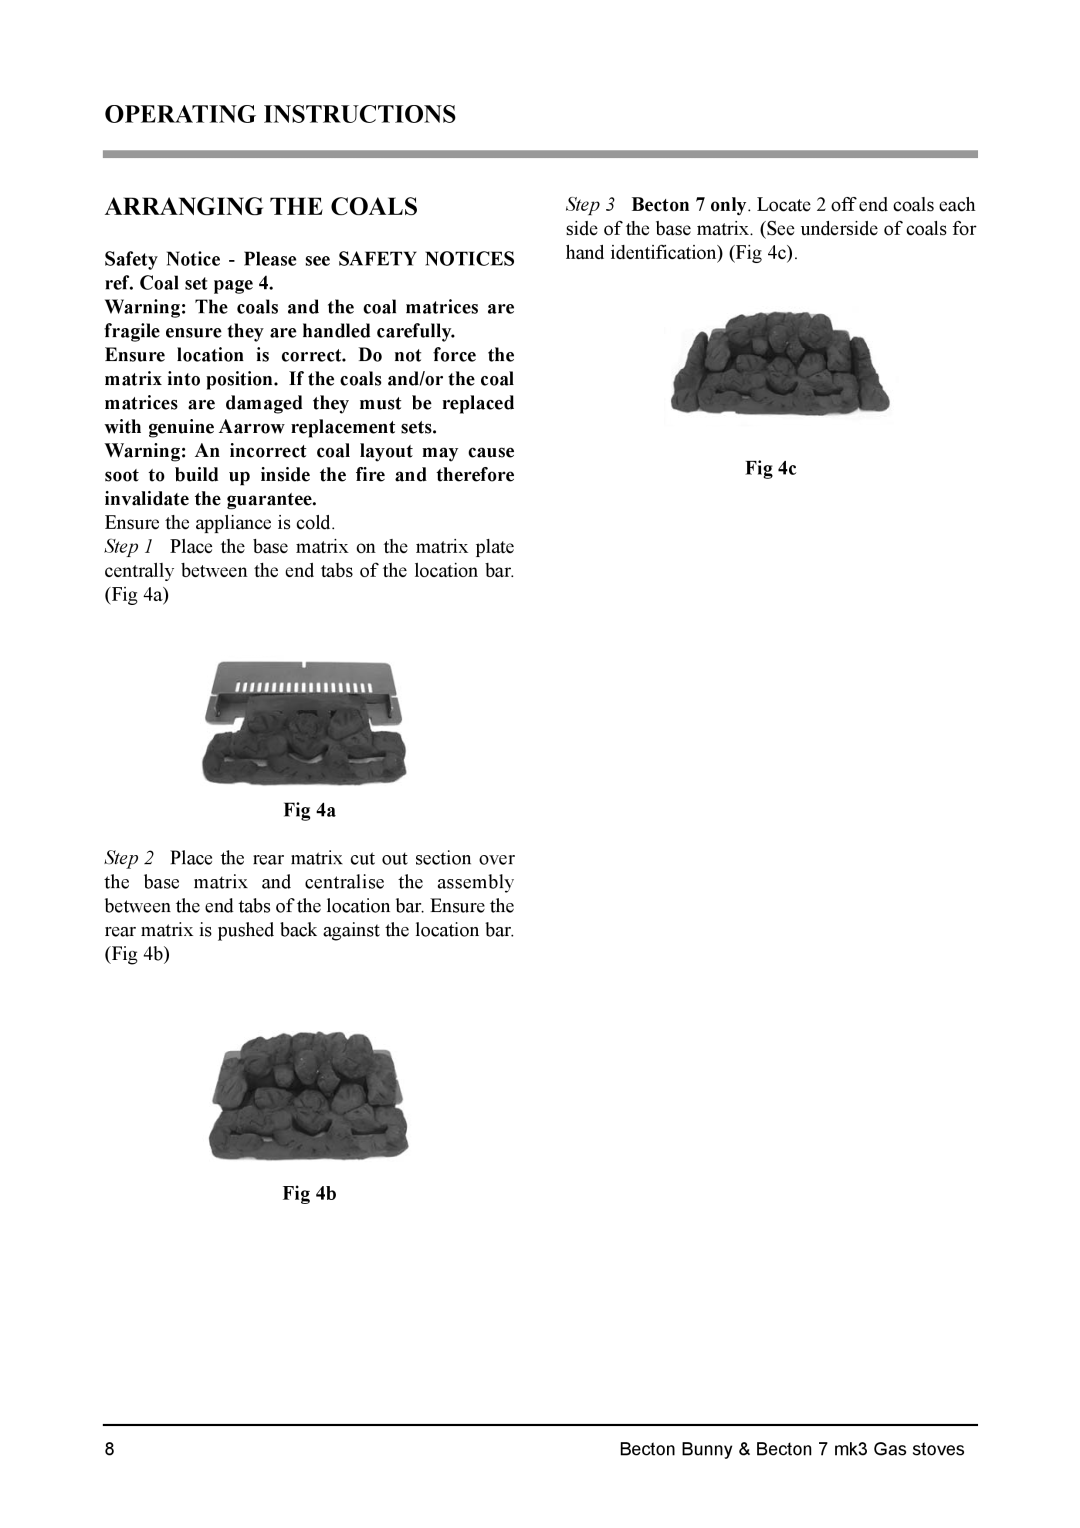 Aarrow Fires Becton Bunny, Becton 7 mk3 installation manual Operating Instructions, Arranging The Coals, b 